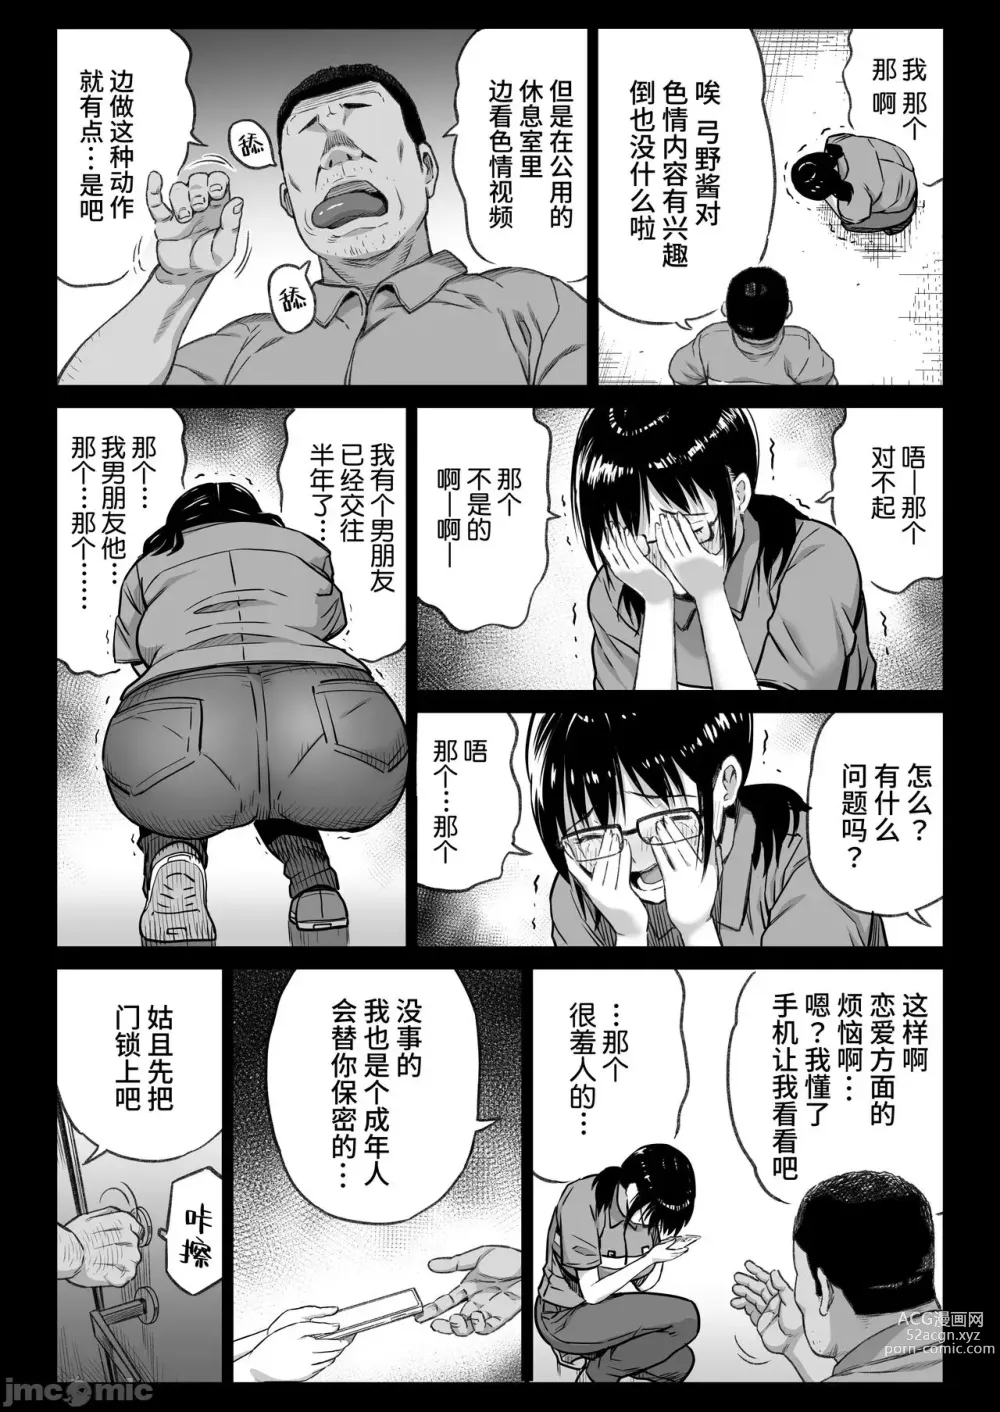 Page 16 of doujinshi 彼氏持ち学生バイト弓野ちゃんは 今日も店長に狙われる